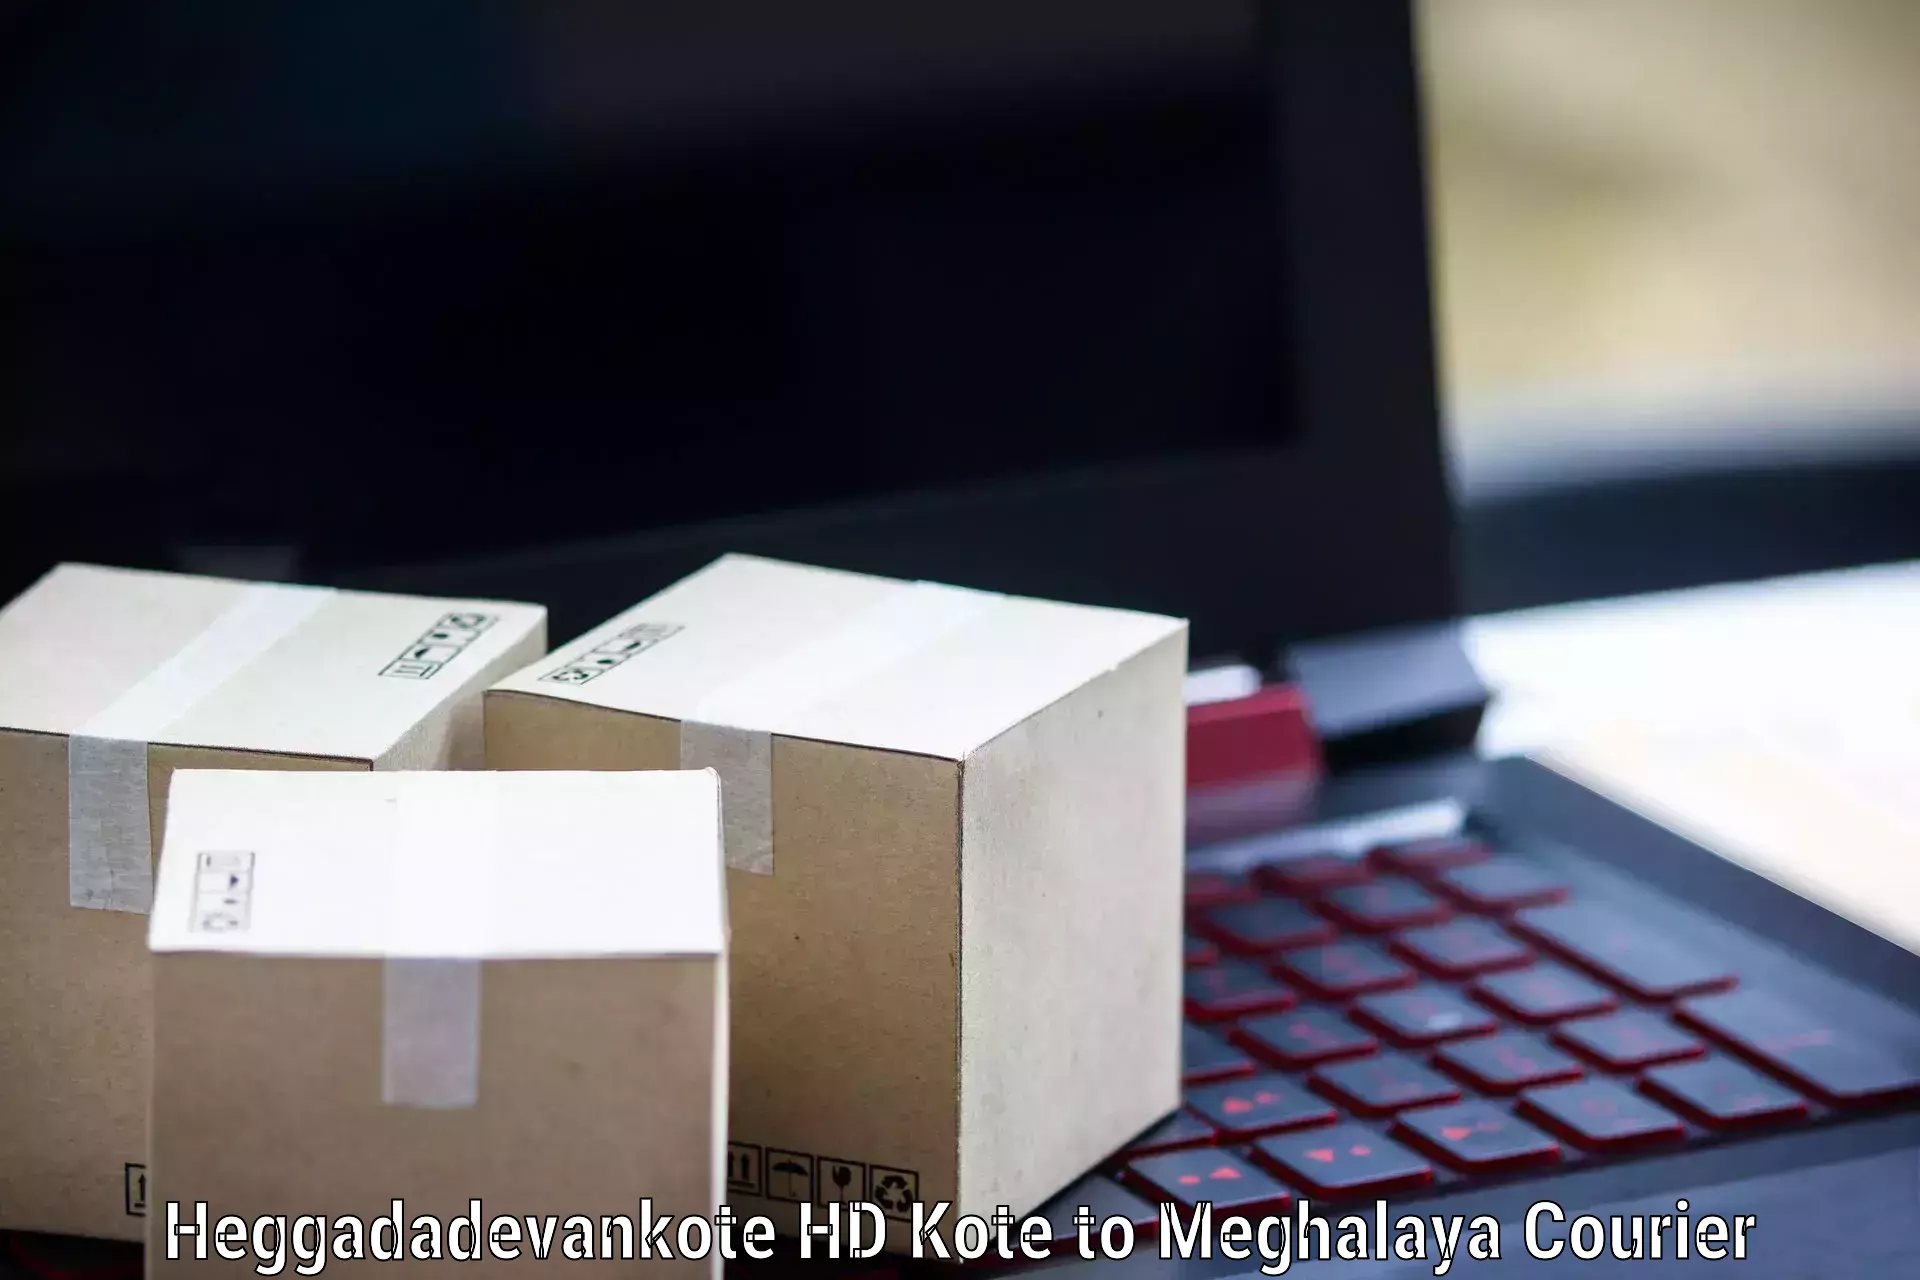 Courier service partnerships Heggadadevankote HD Kote to Tura